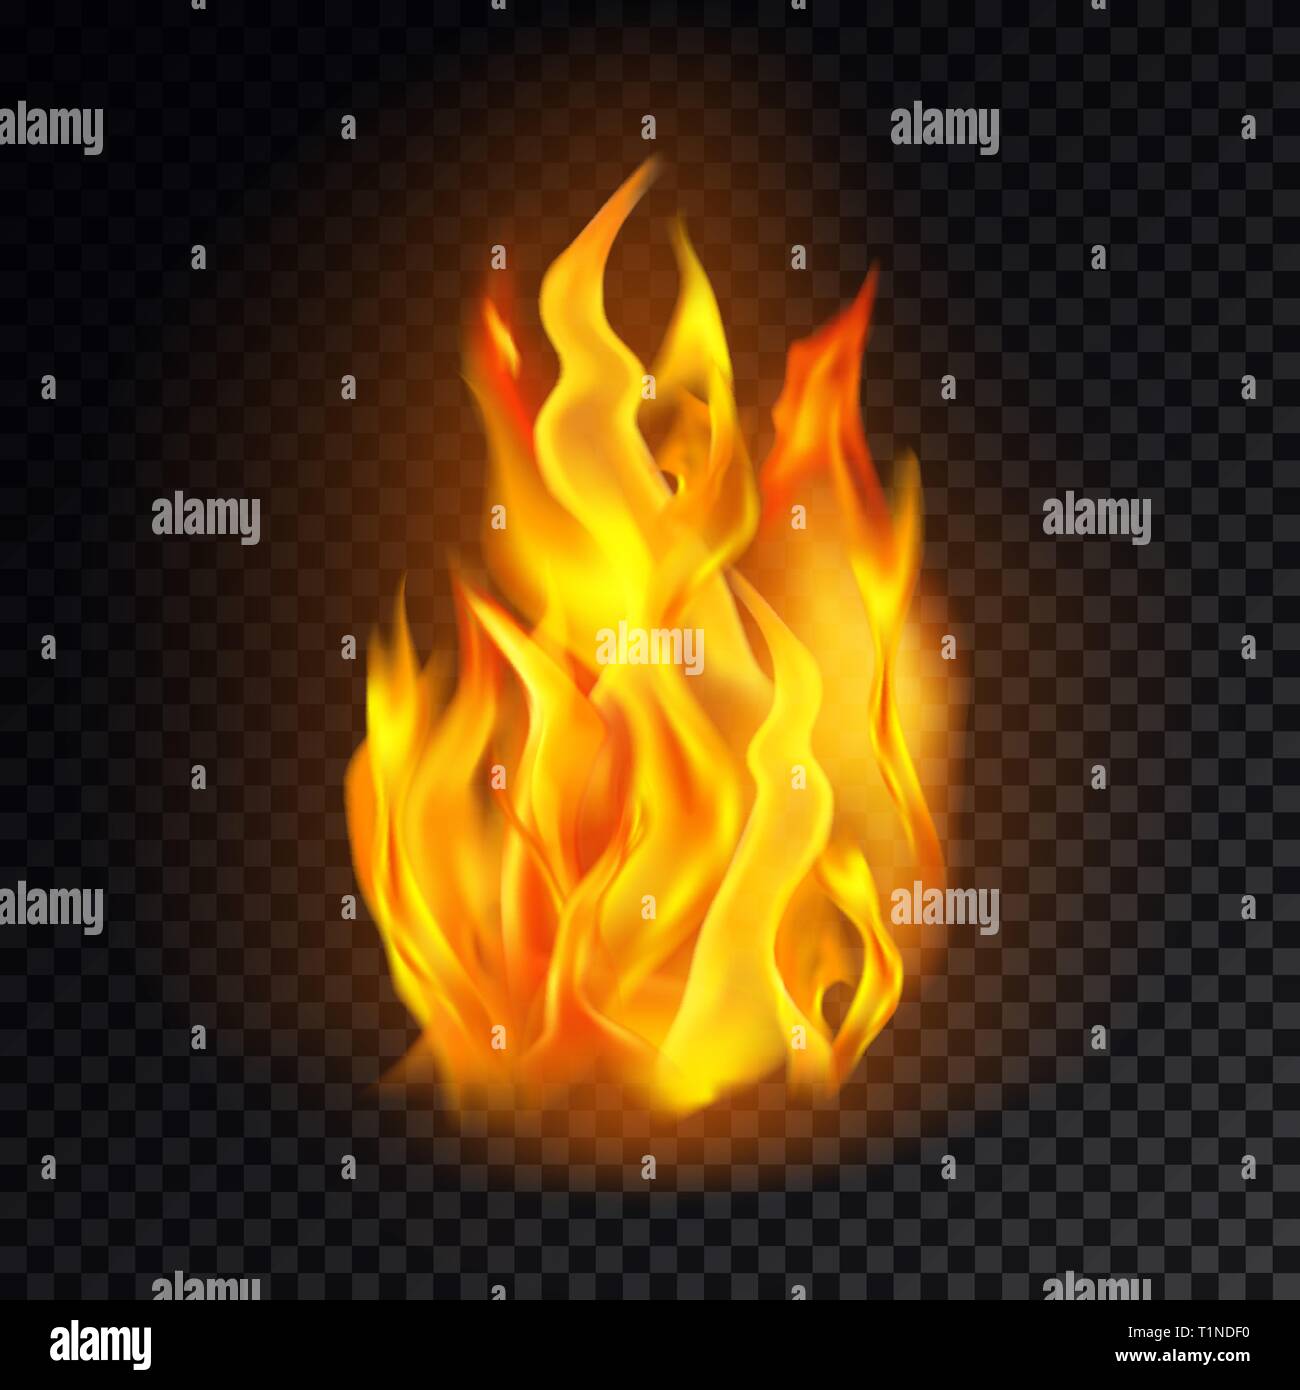 Flame icon or fire emoji, lit emoticon, danger Stock Vector